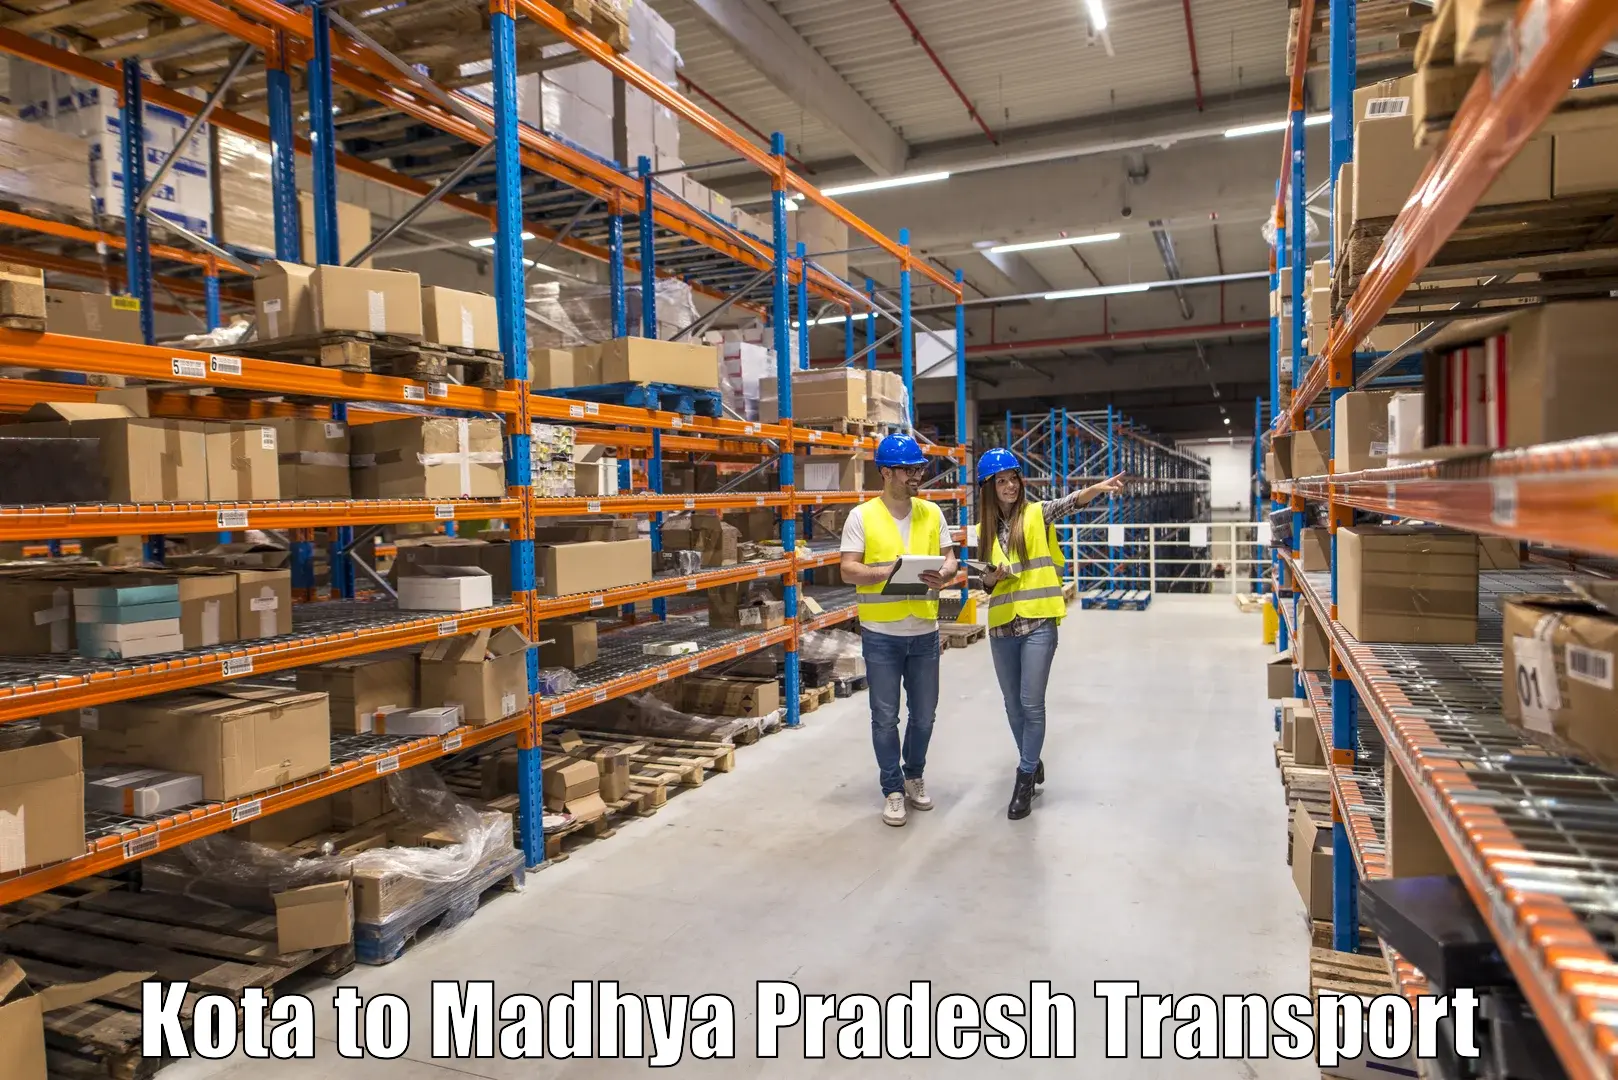 Transport bike from one state to another Kota to Madhya Pradesh